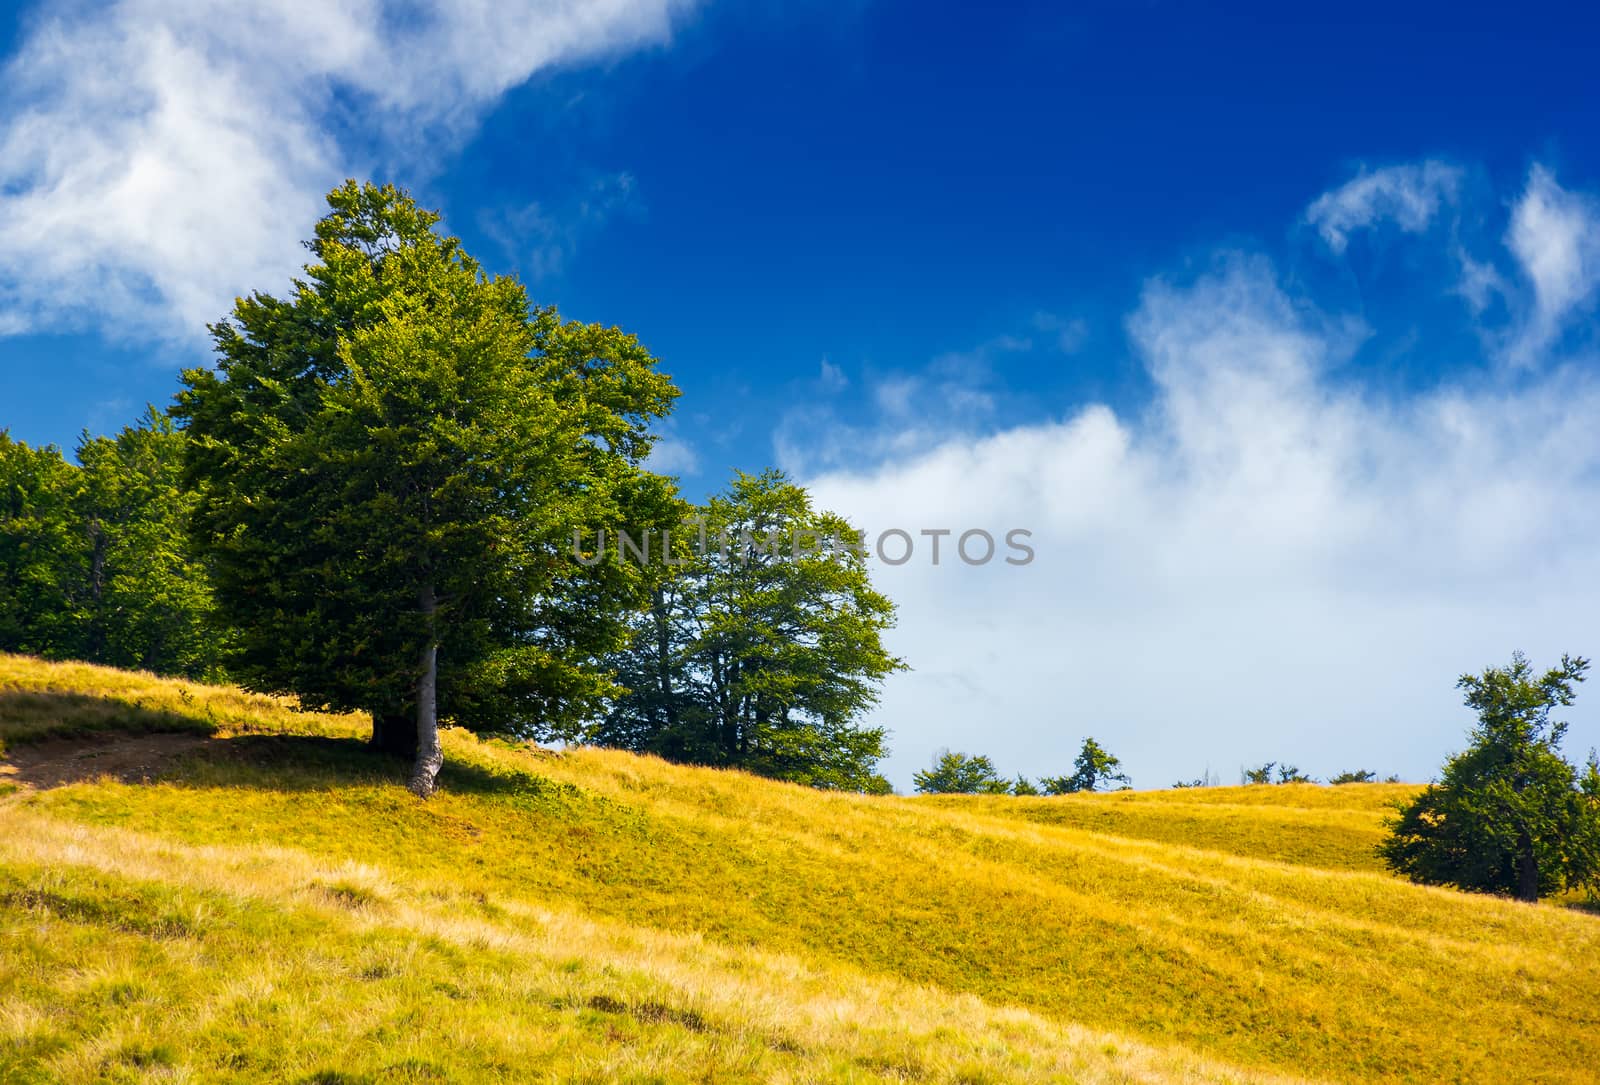 trees on a grassy hillside in summer by Pellinni